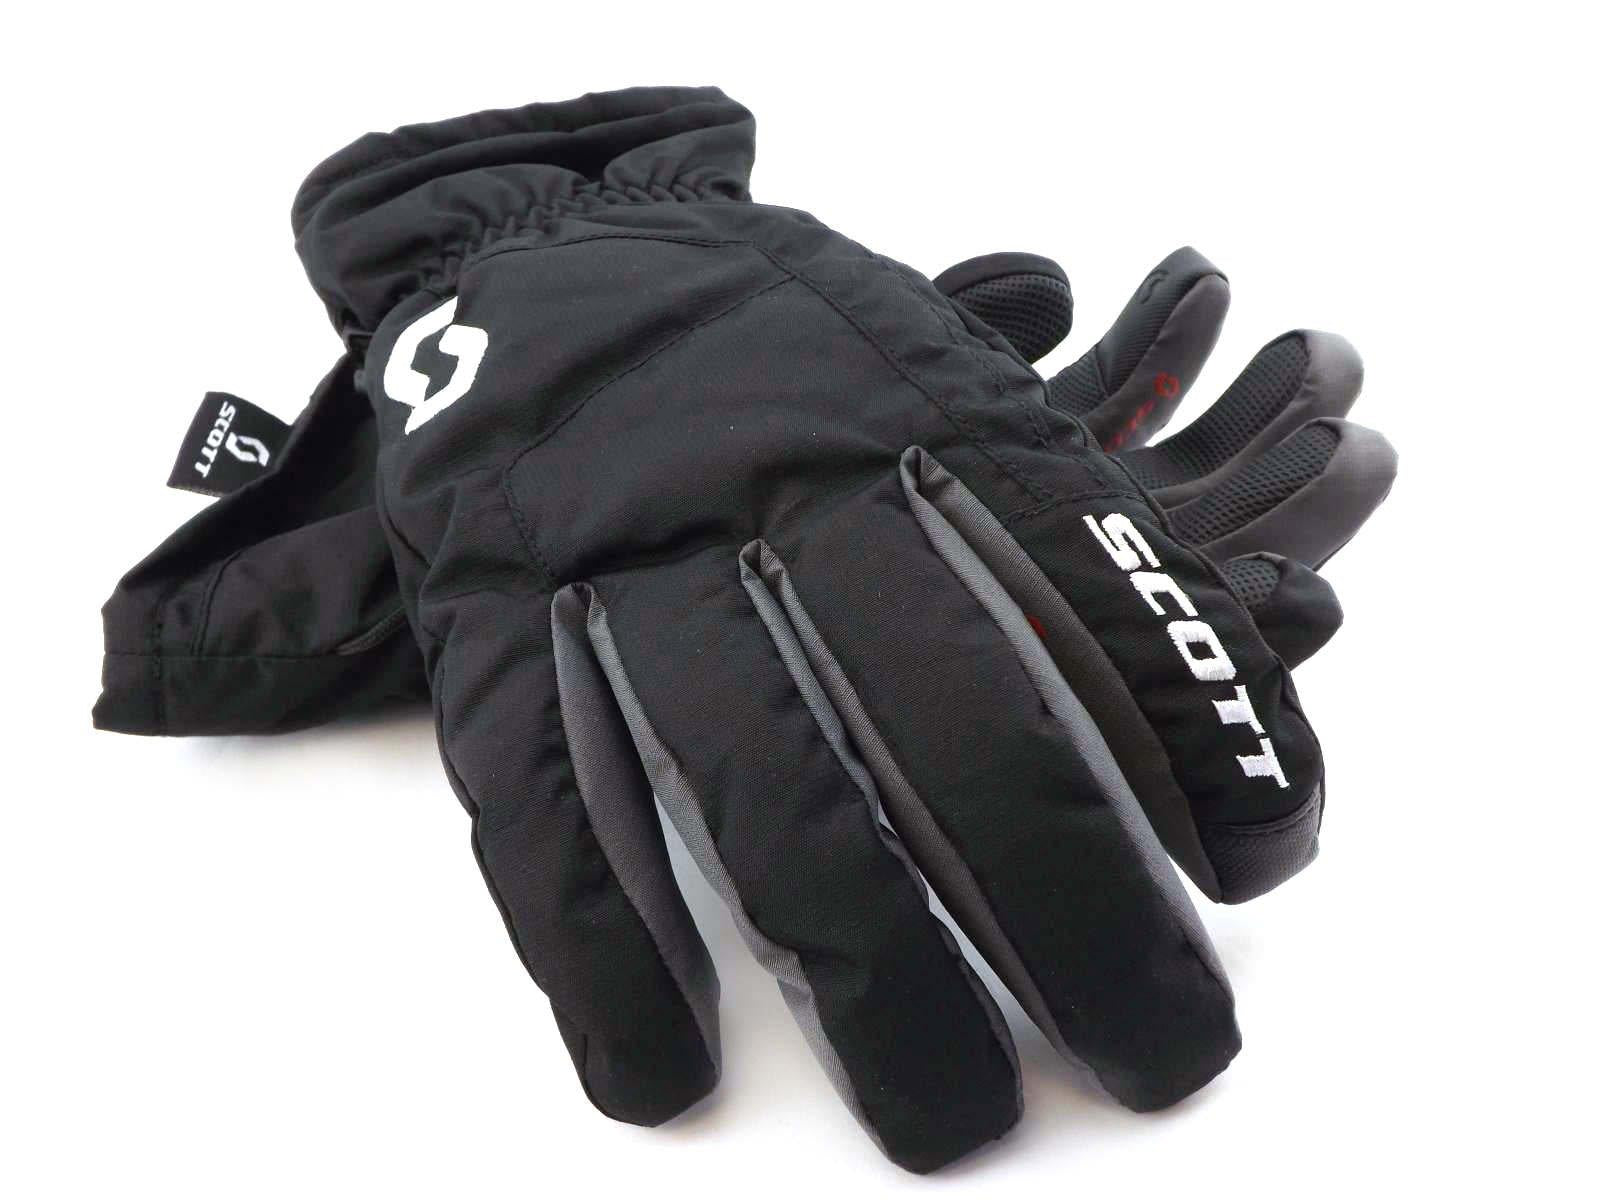 Scott Ultimate Glove - Unisex (Black)